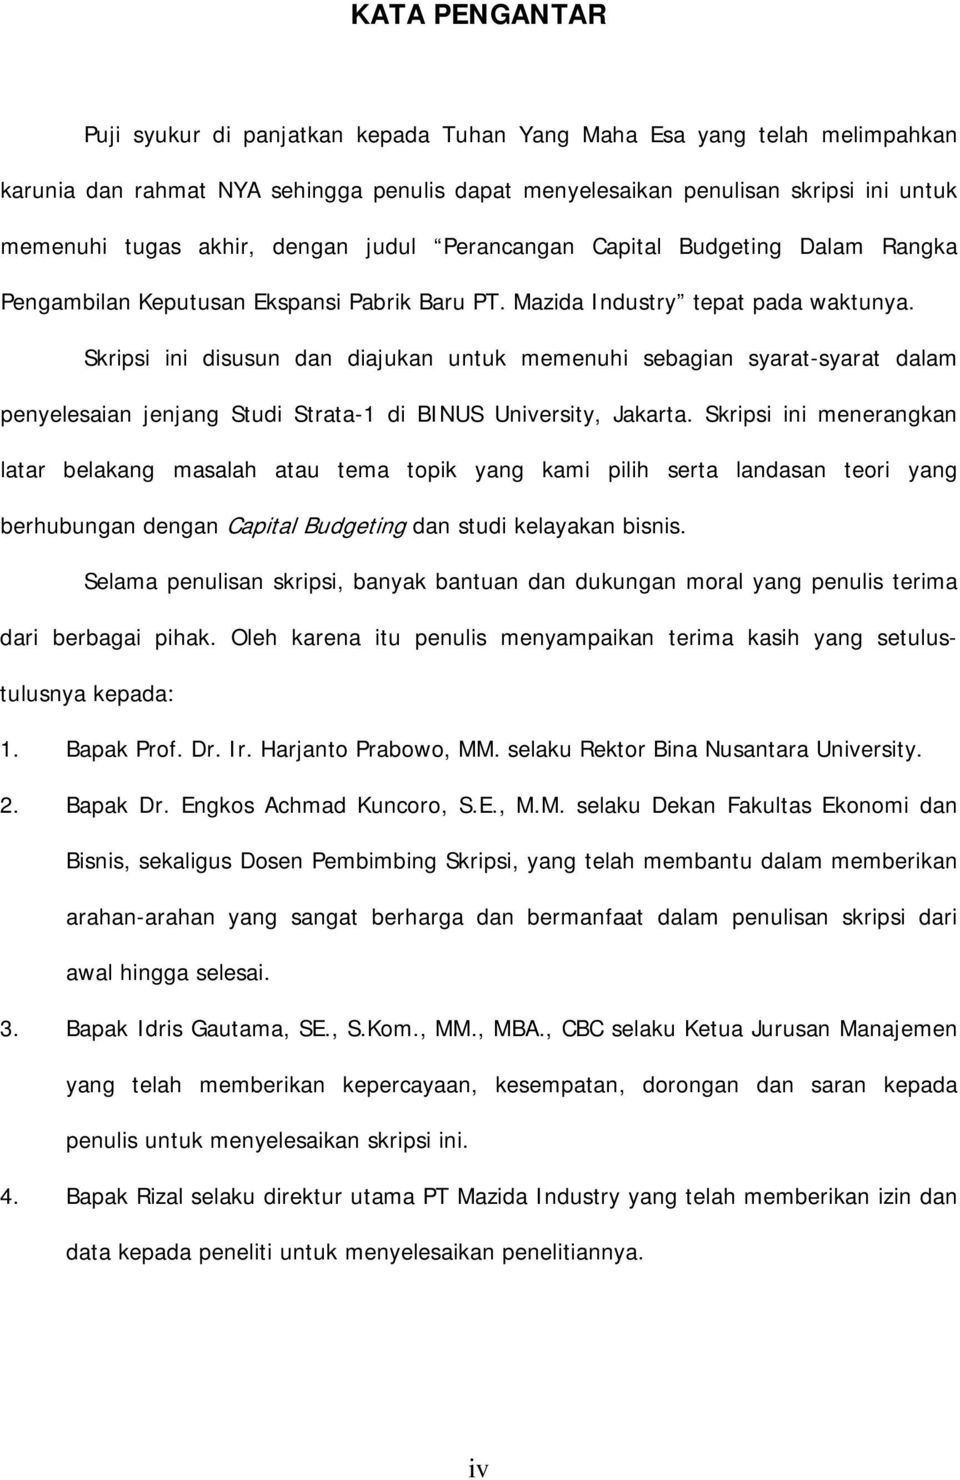 Skripsi ini disusun dan diajukan untuk memenuhi sebagian syarat-syarat dalam penyelesaian jenjang Studi Strata-1 di BINUS University, Jakarta.